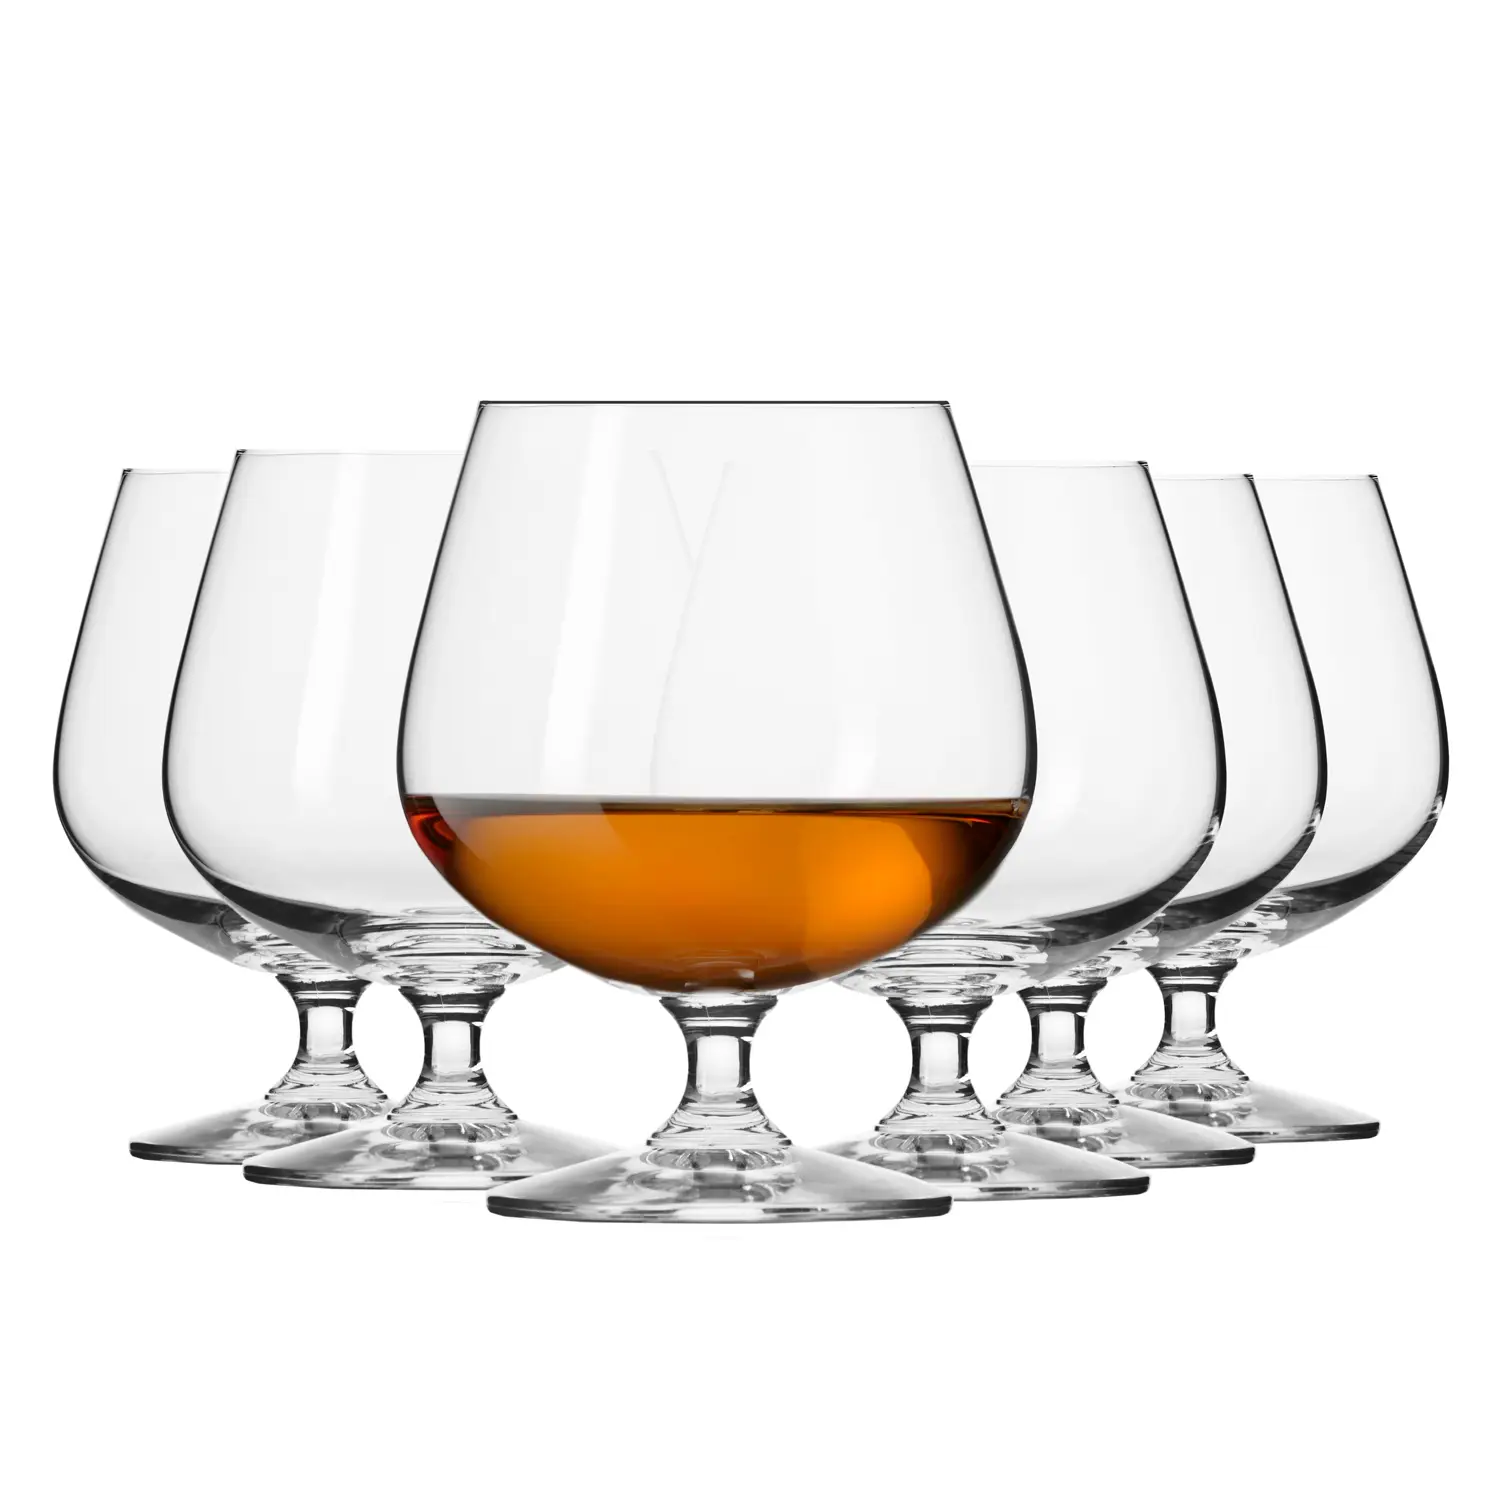 Krosno Cognac (Set Gl盲ser 6) Balance